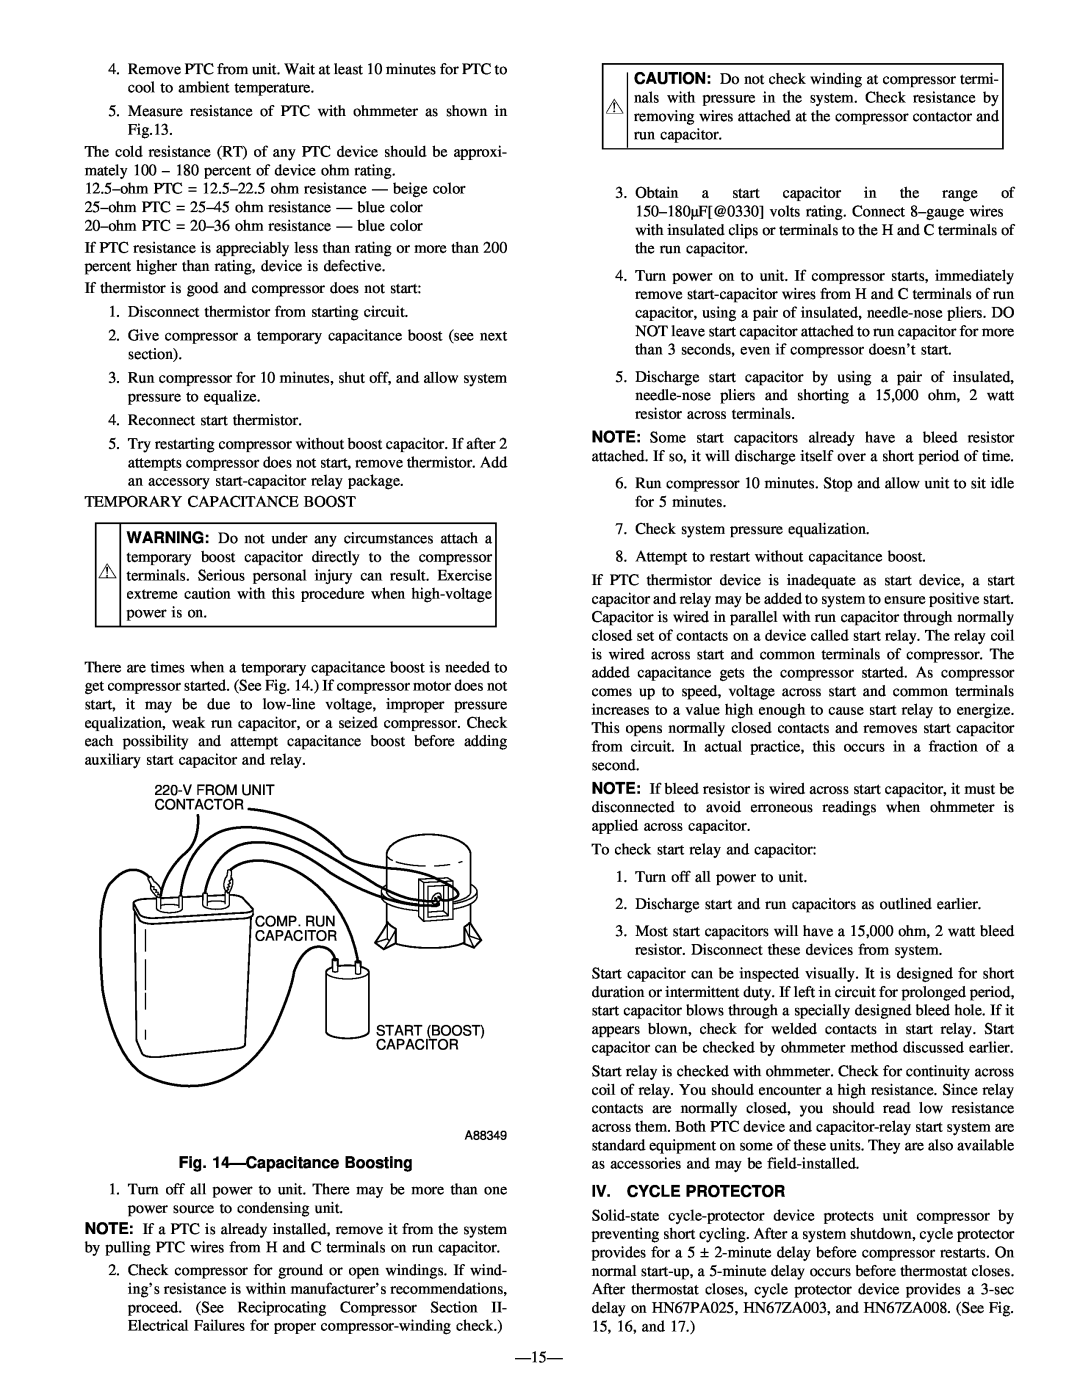 Bryant R-22 service manual CapacitanceBoosting, Iv. Cycle Protector 